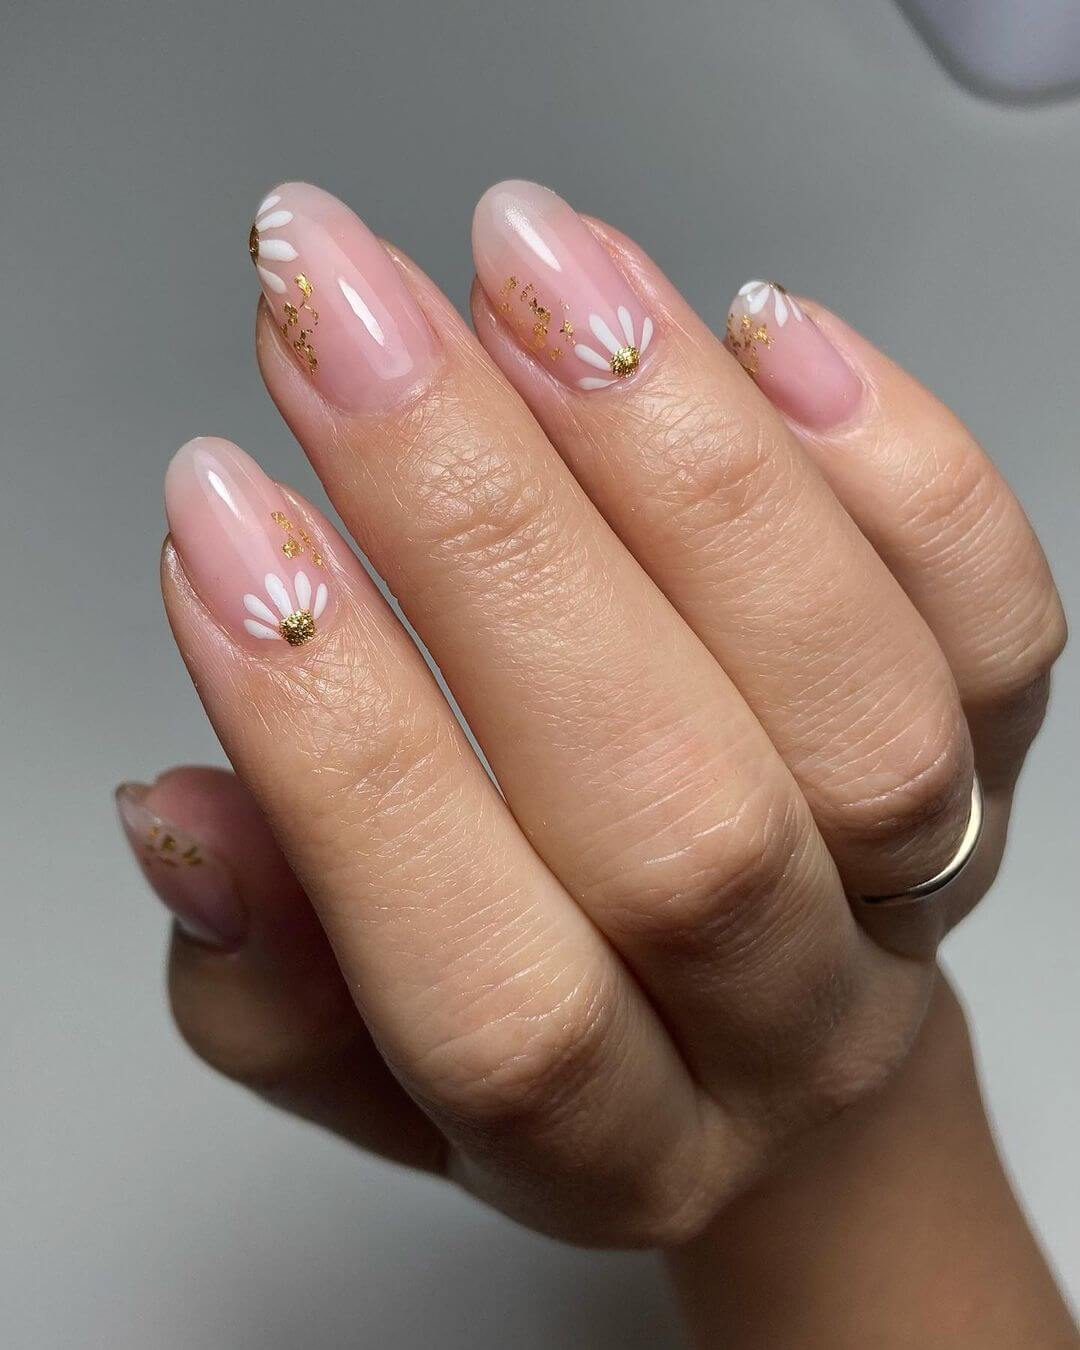 Flower Nail Art Designs Elegant Pastel Pink with Glittery Flowers